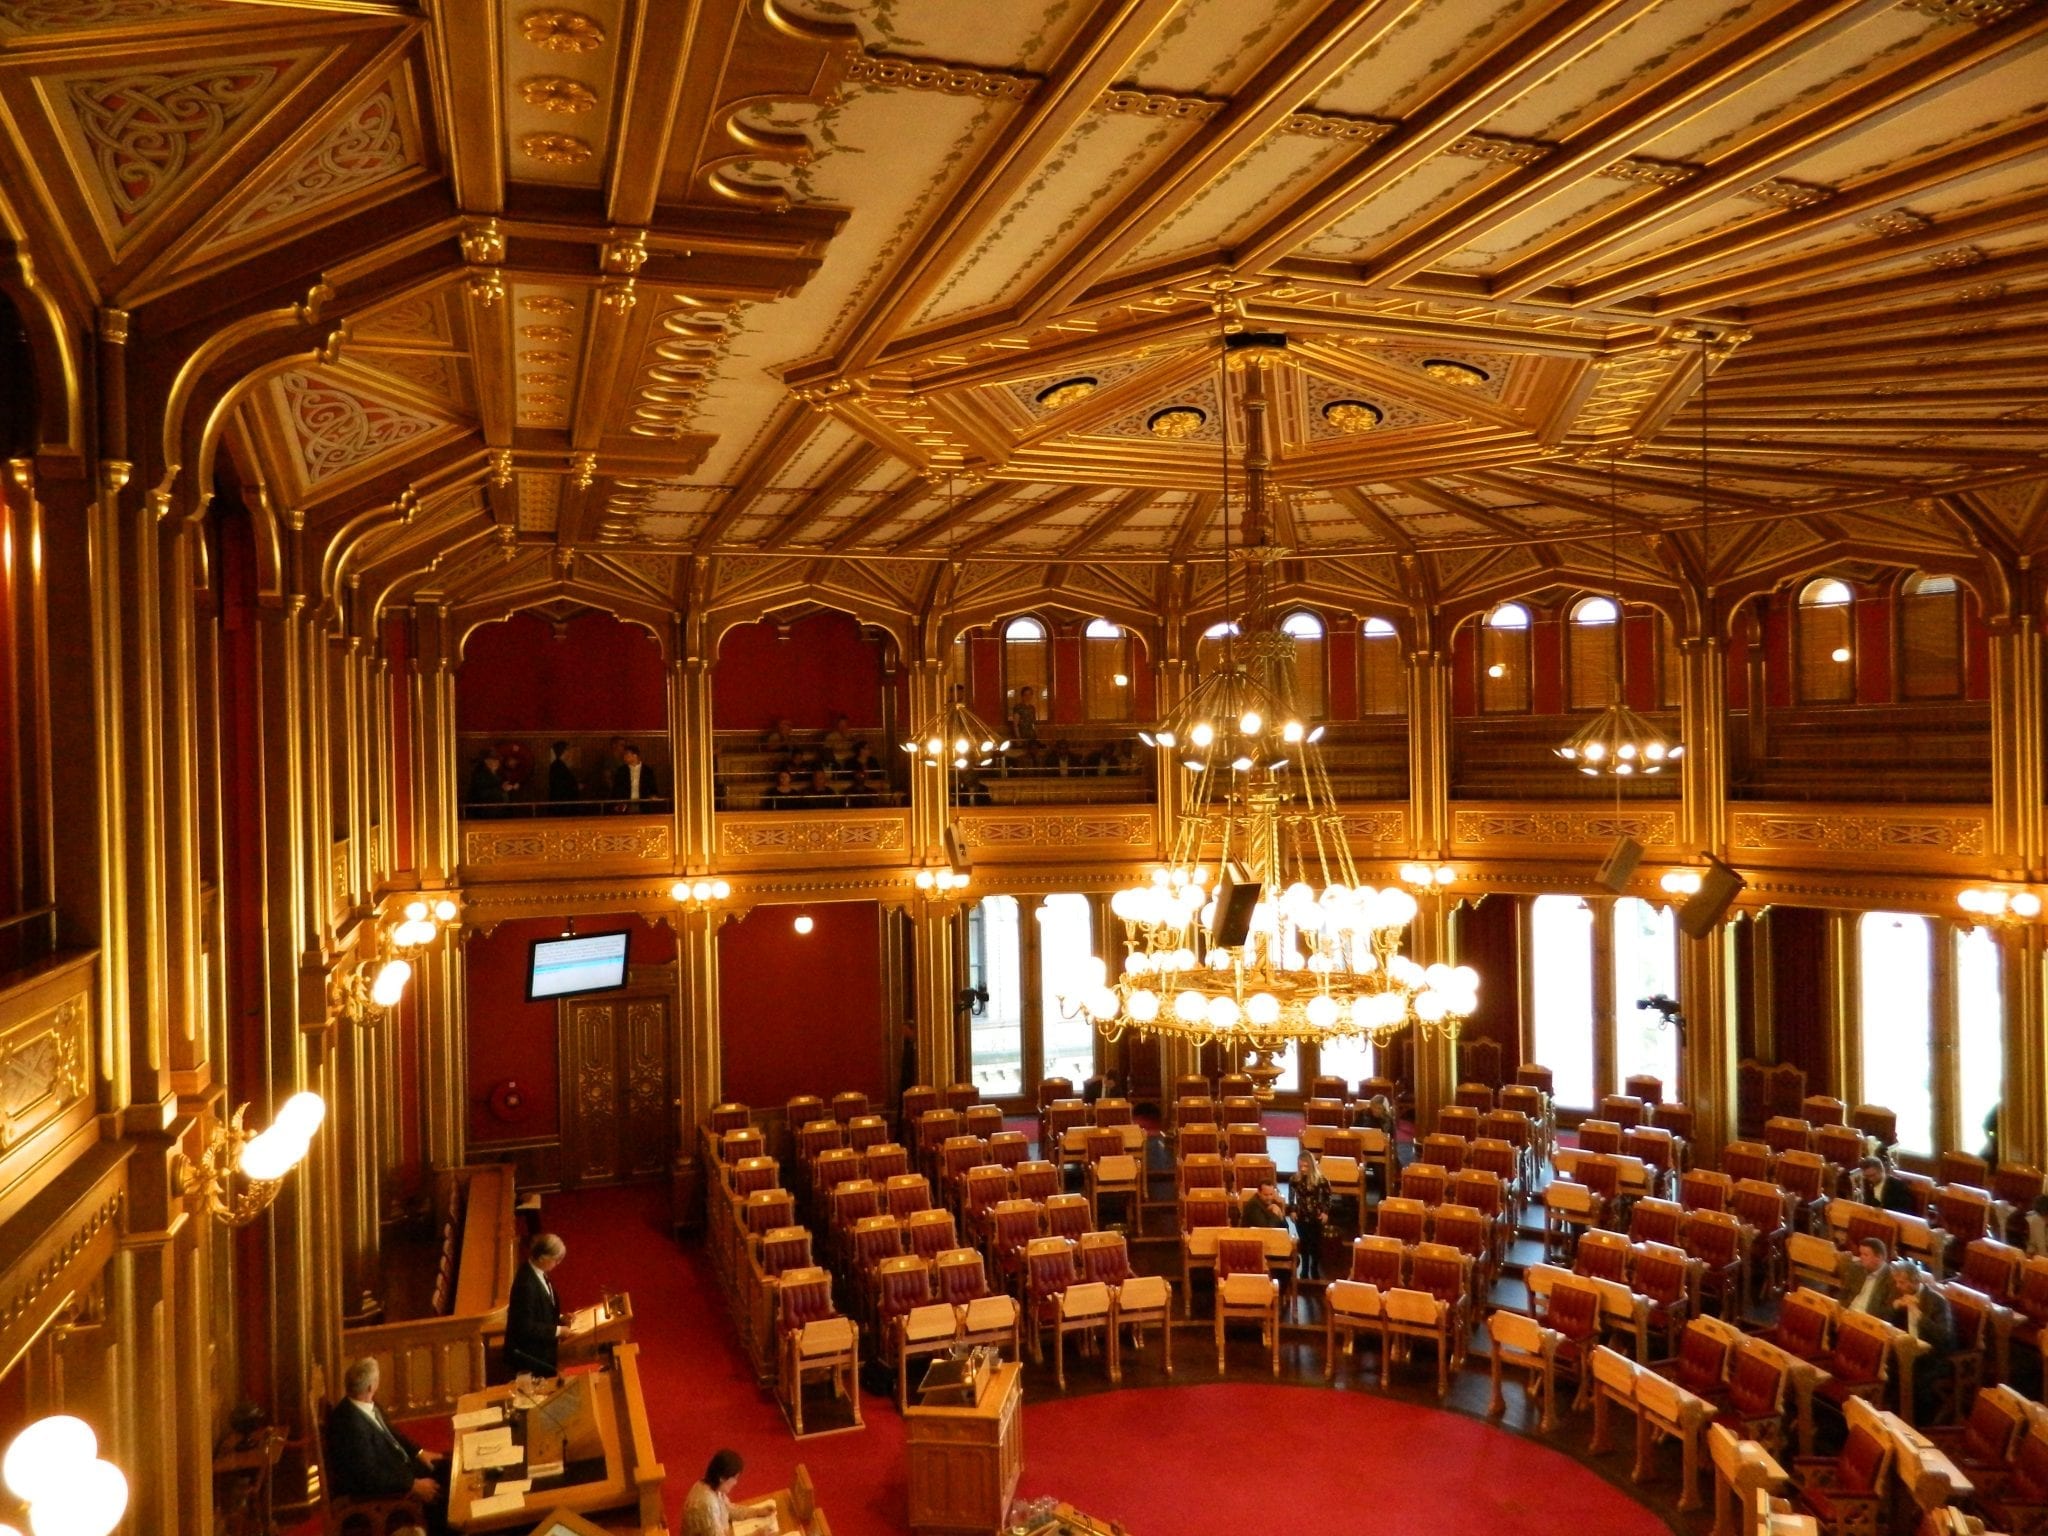 Day 8: Norwegian Parliament